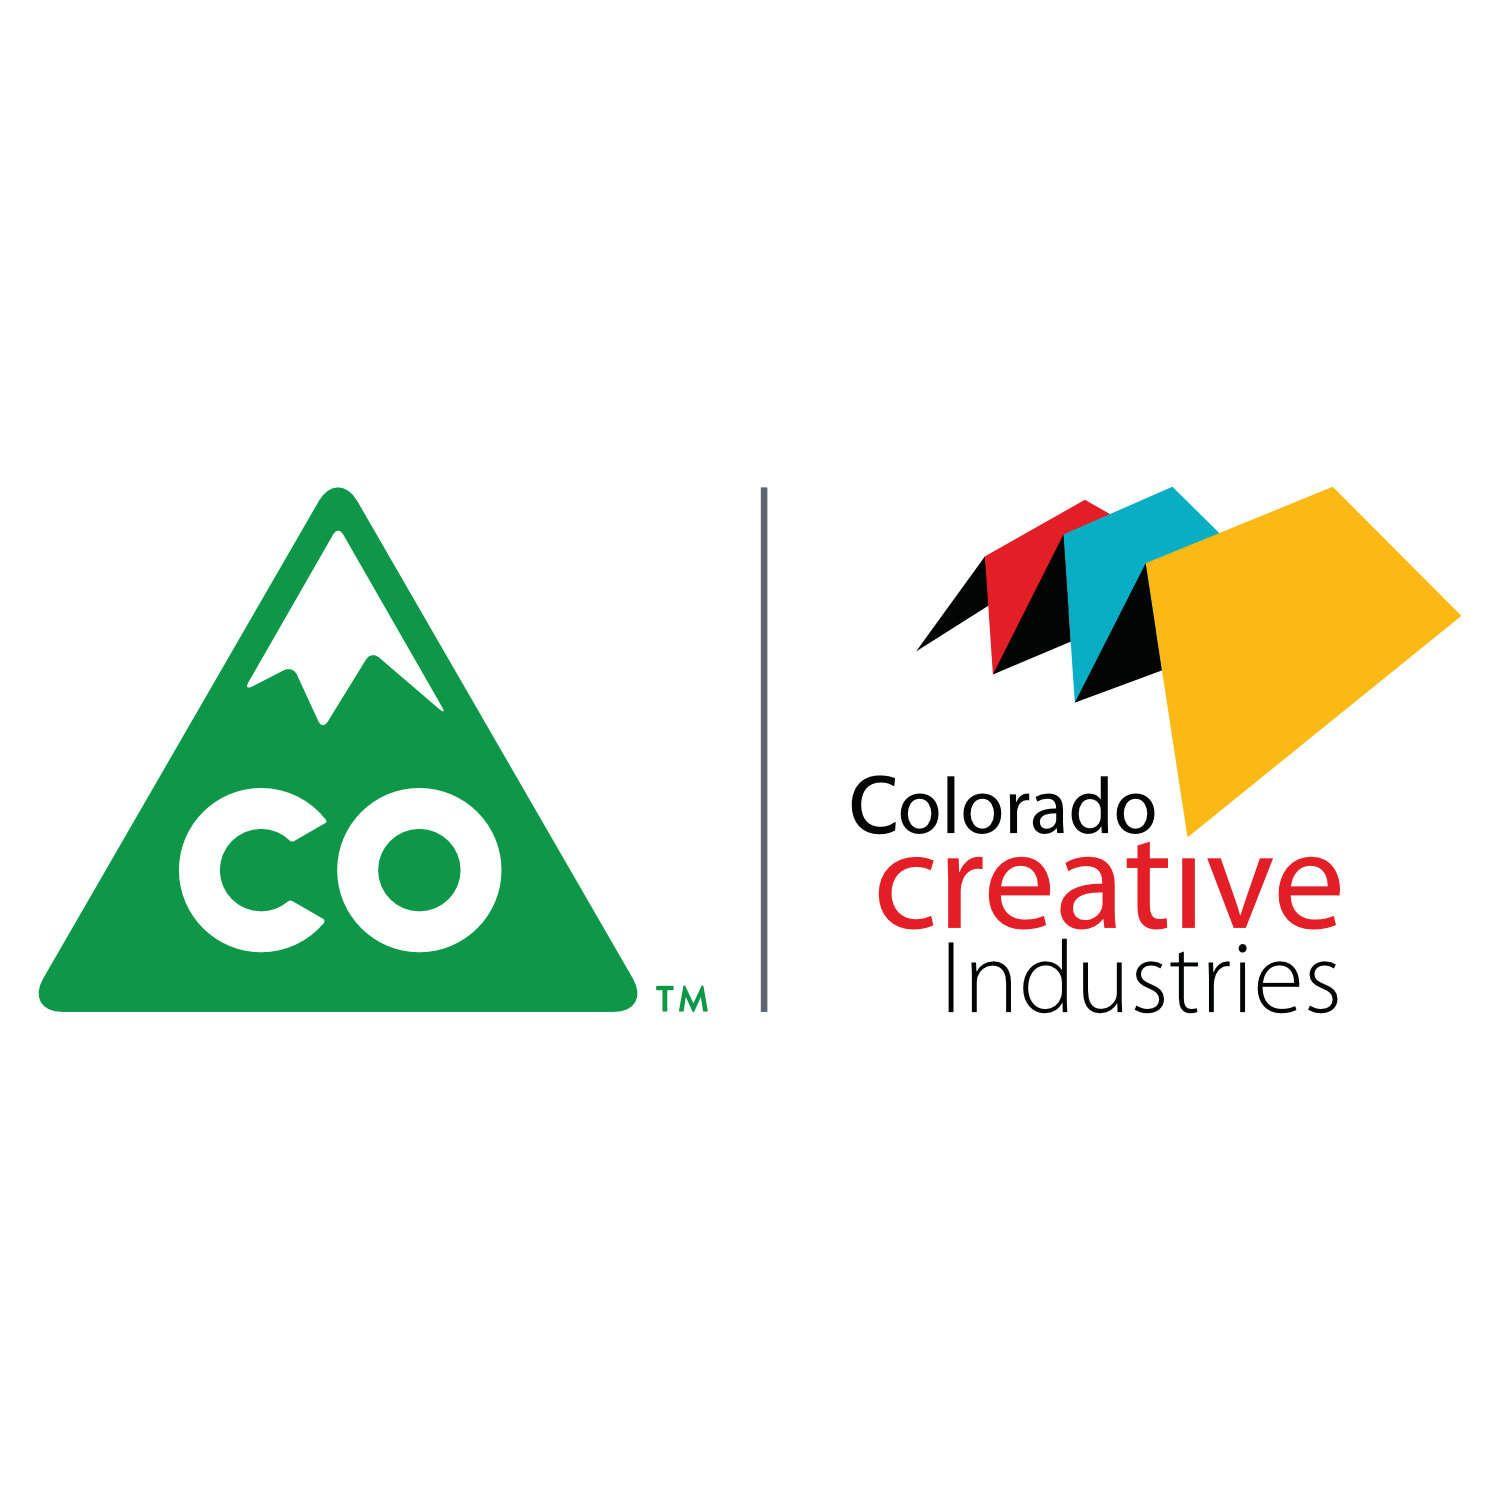 Colorado Corporate Logo - Corporate Giving | Colorado Music Festival and Center for Musical ...